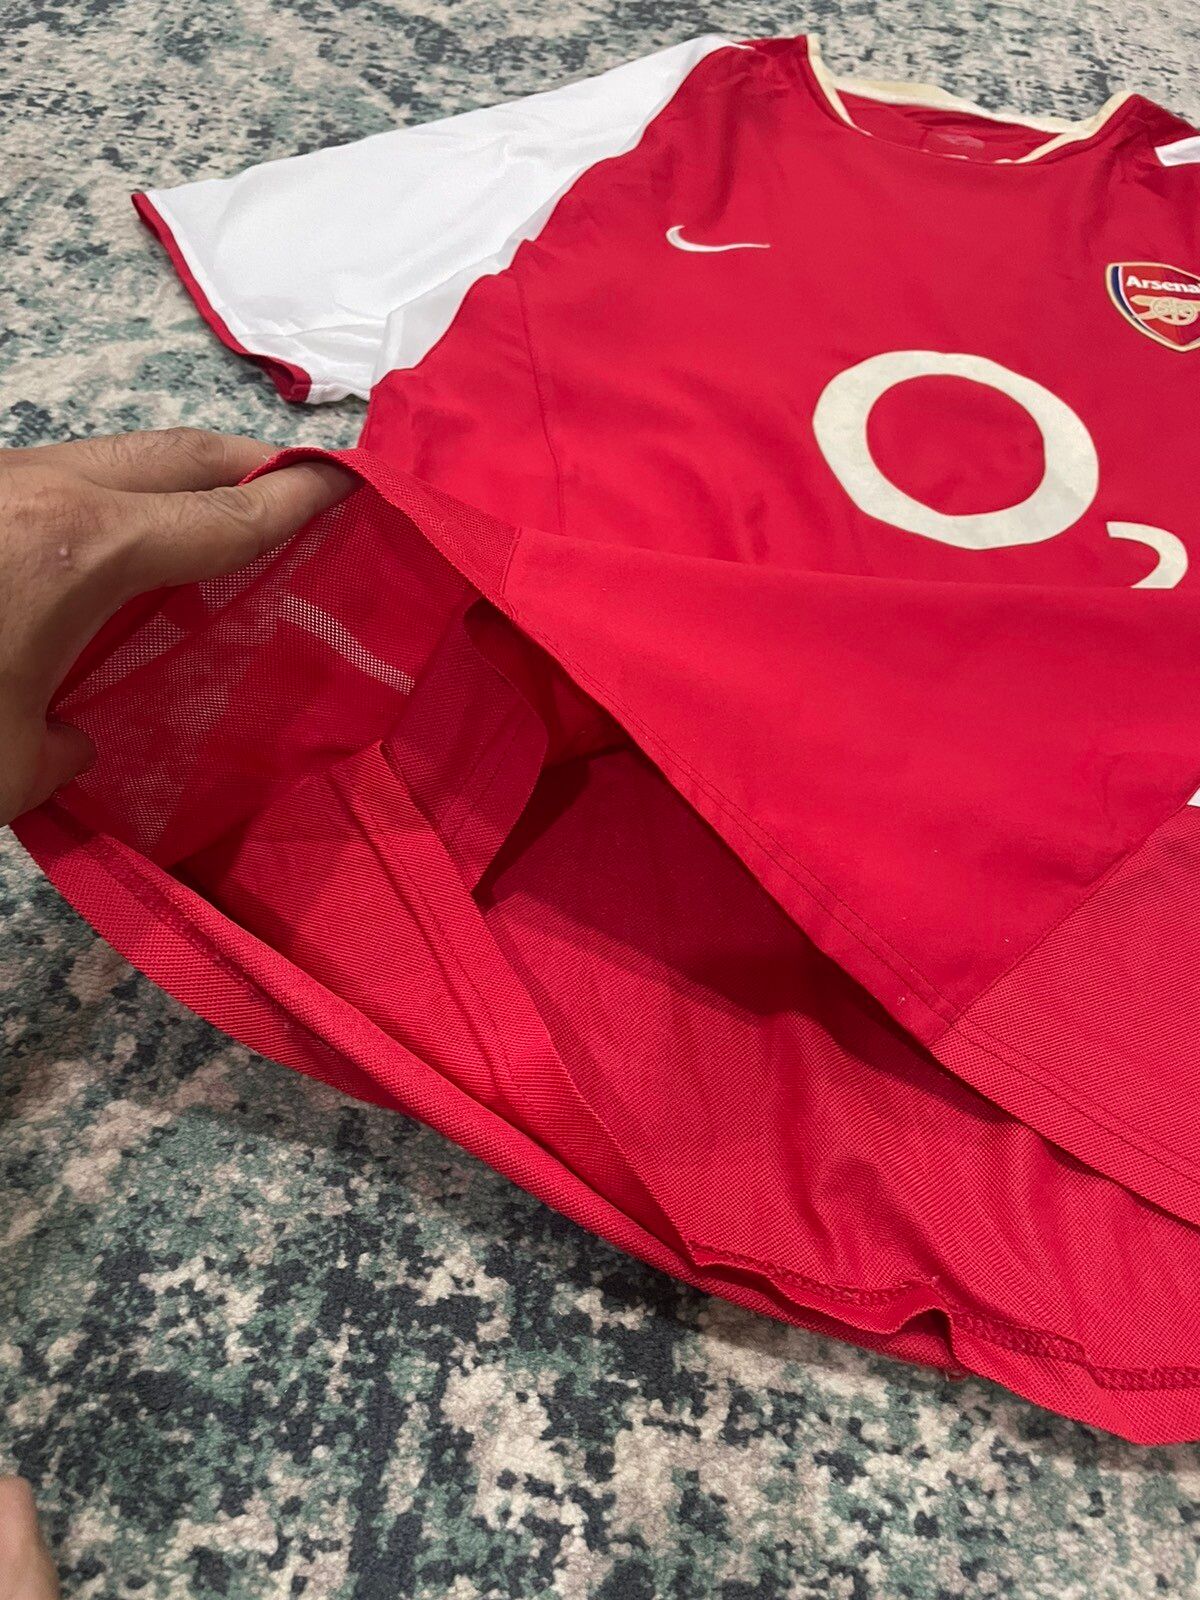 Arsenal 02/03 Vintage Jersey - 10